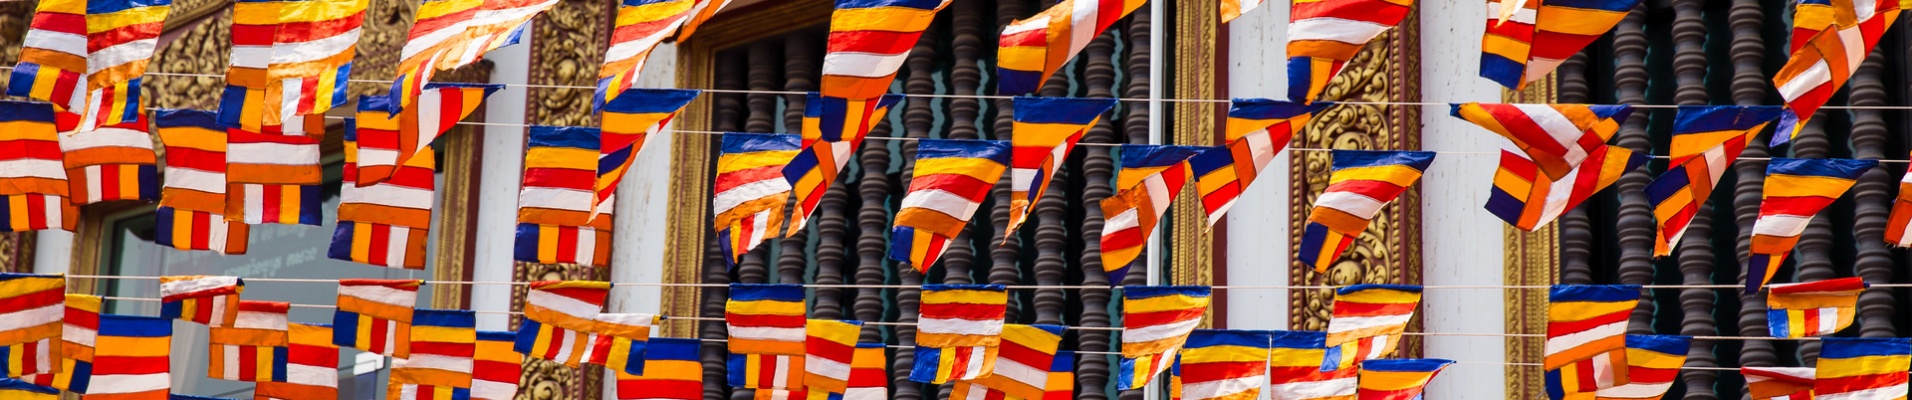 drapeaux bouddhistes temple cambodge